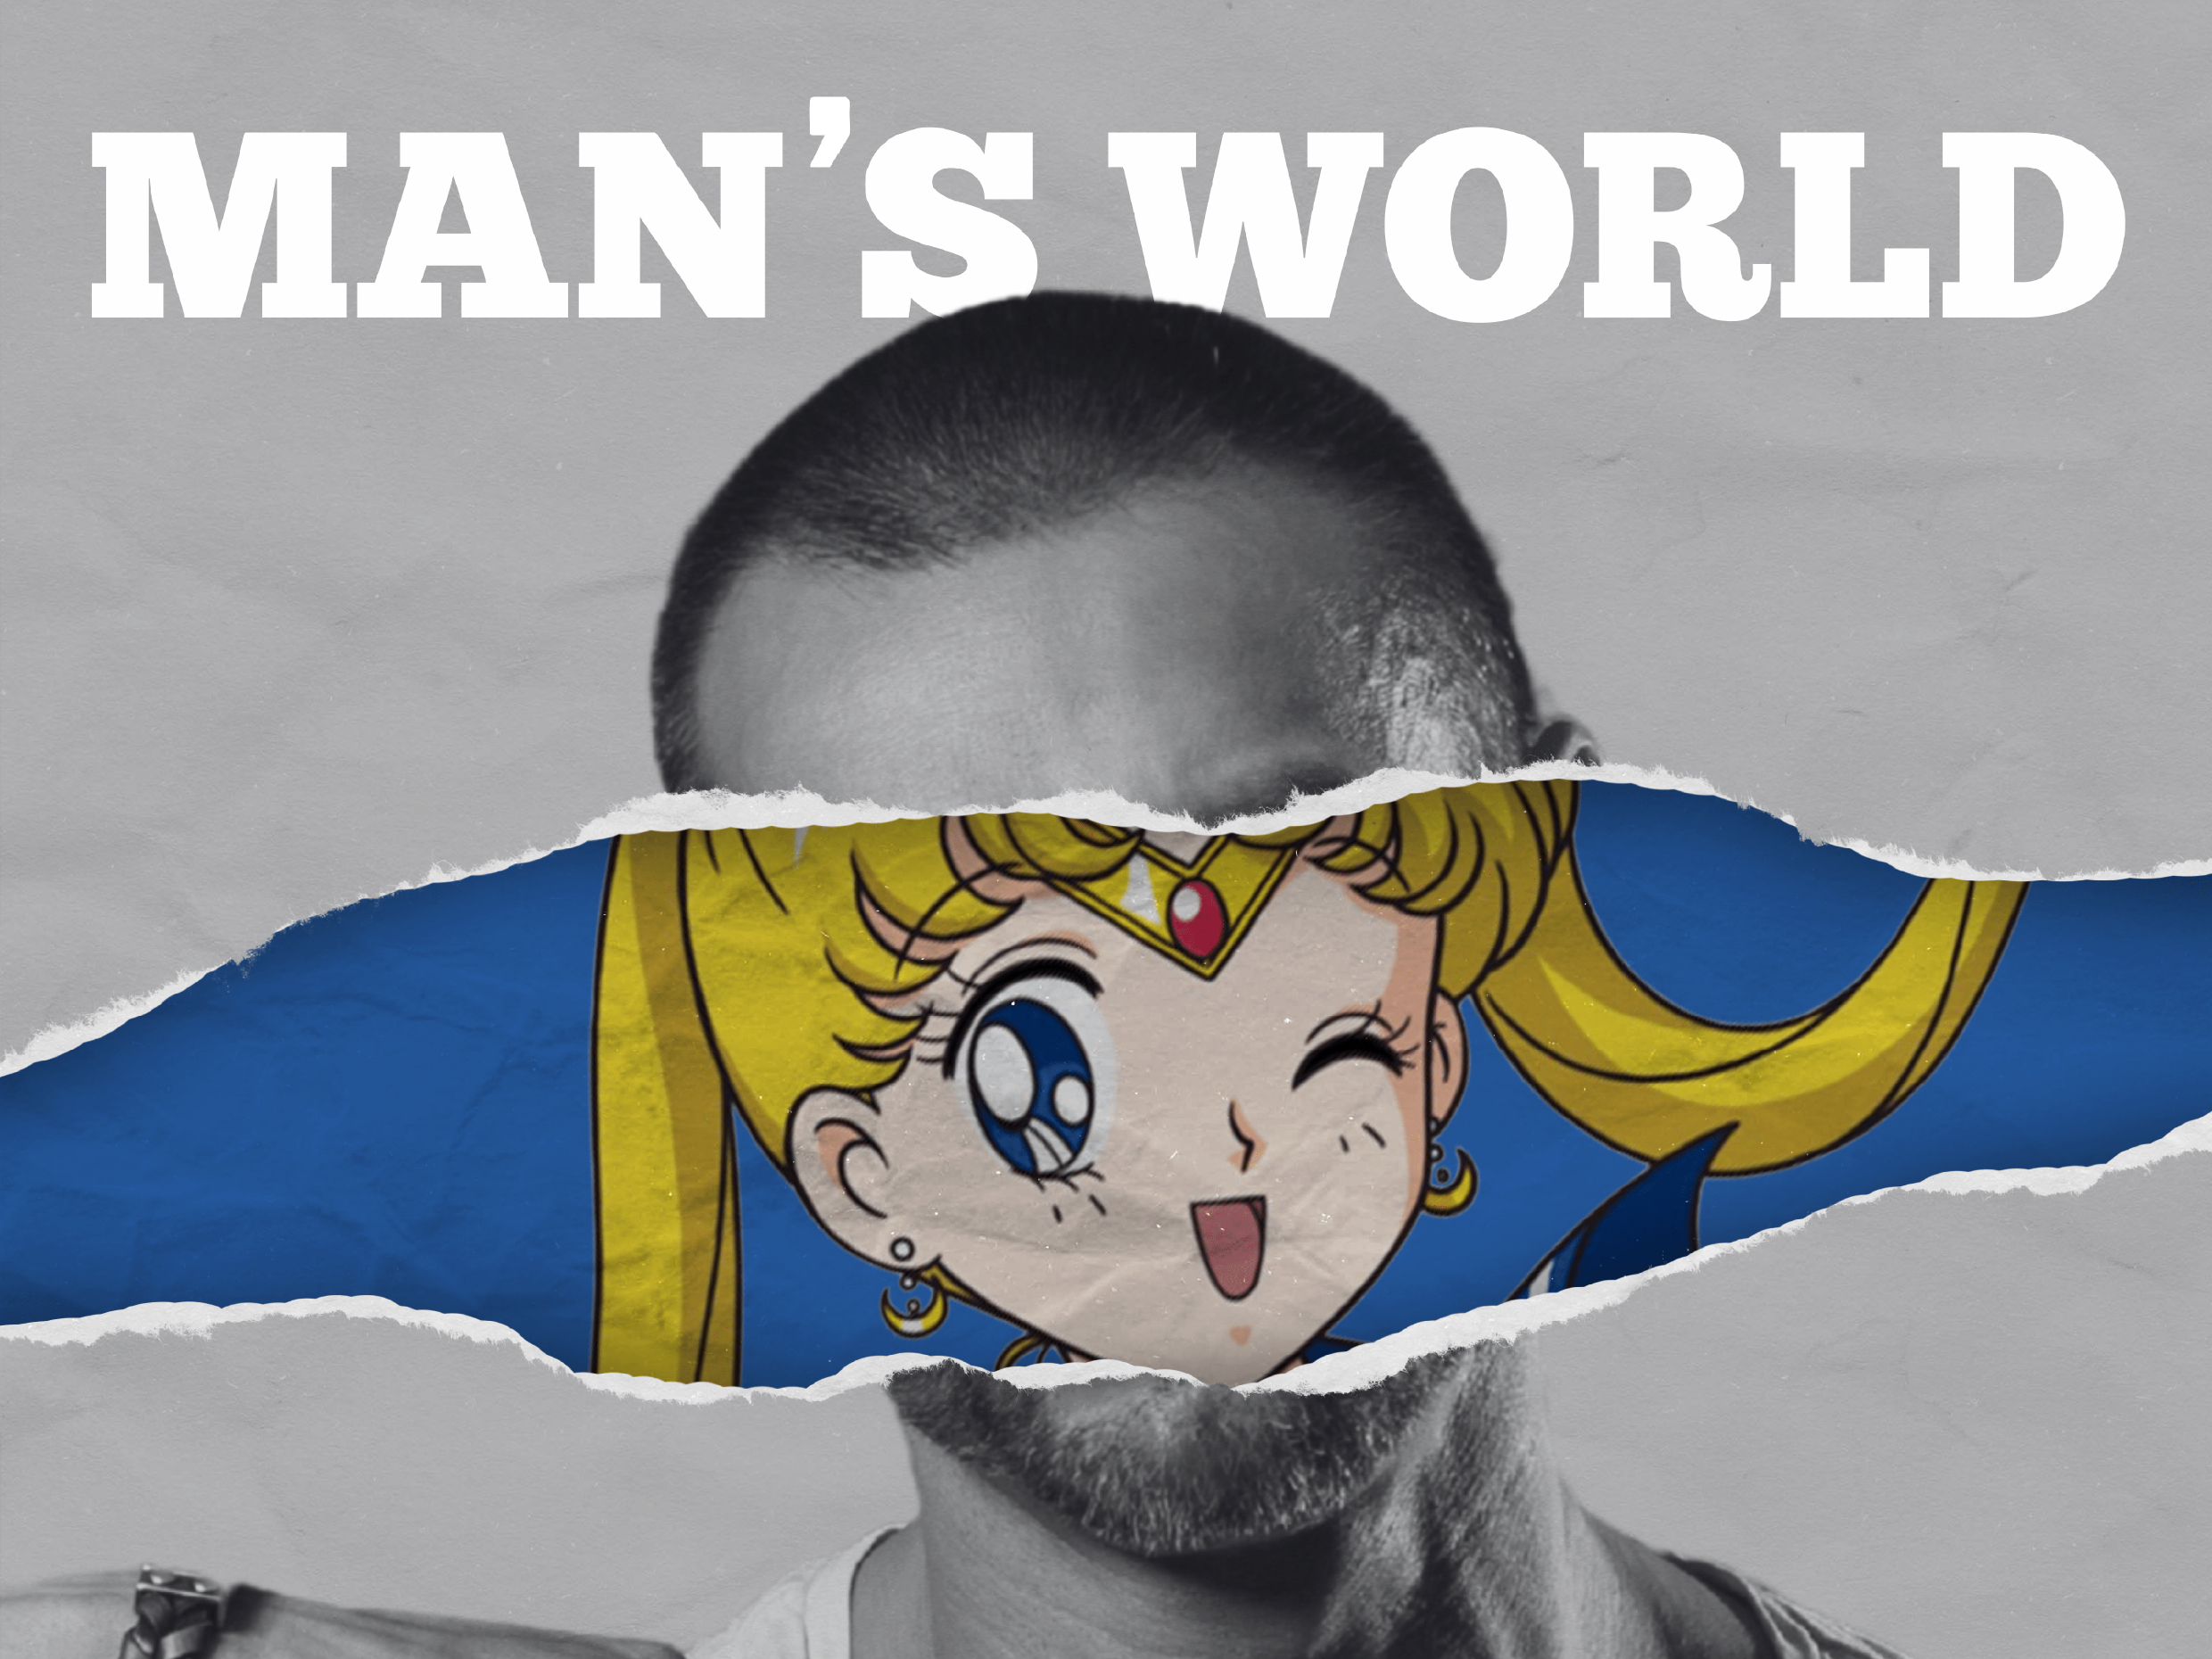 Introducing MAN’S WORLD